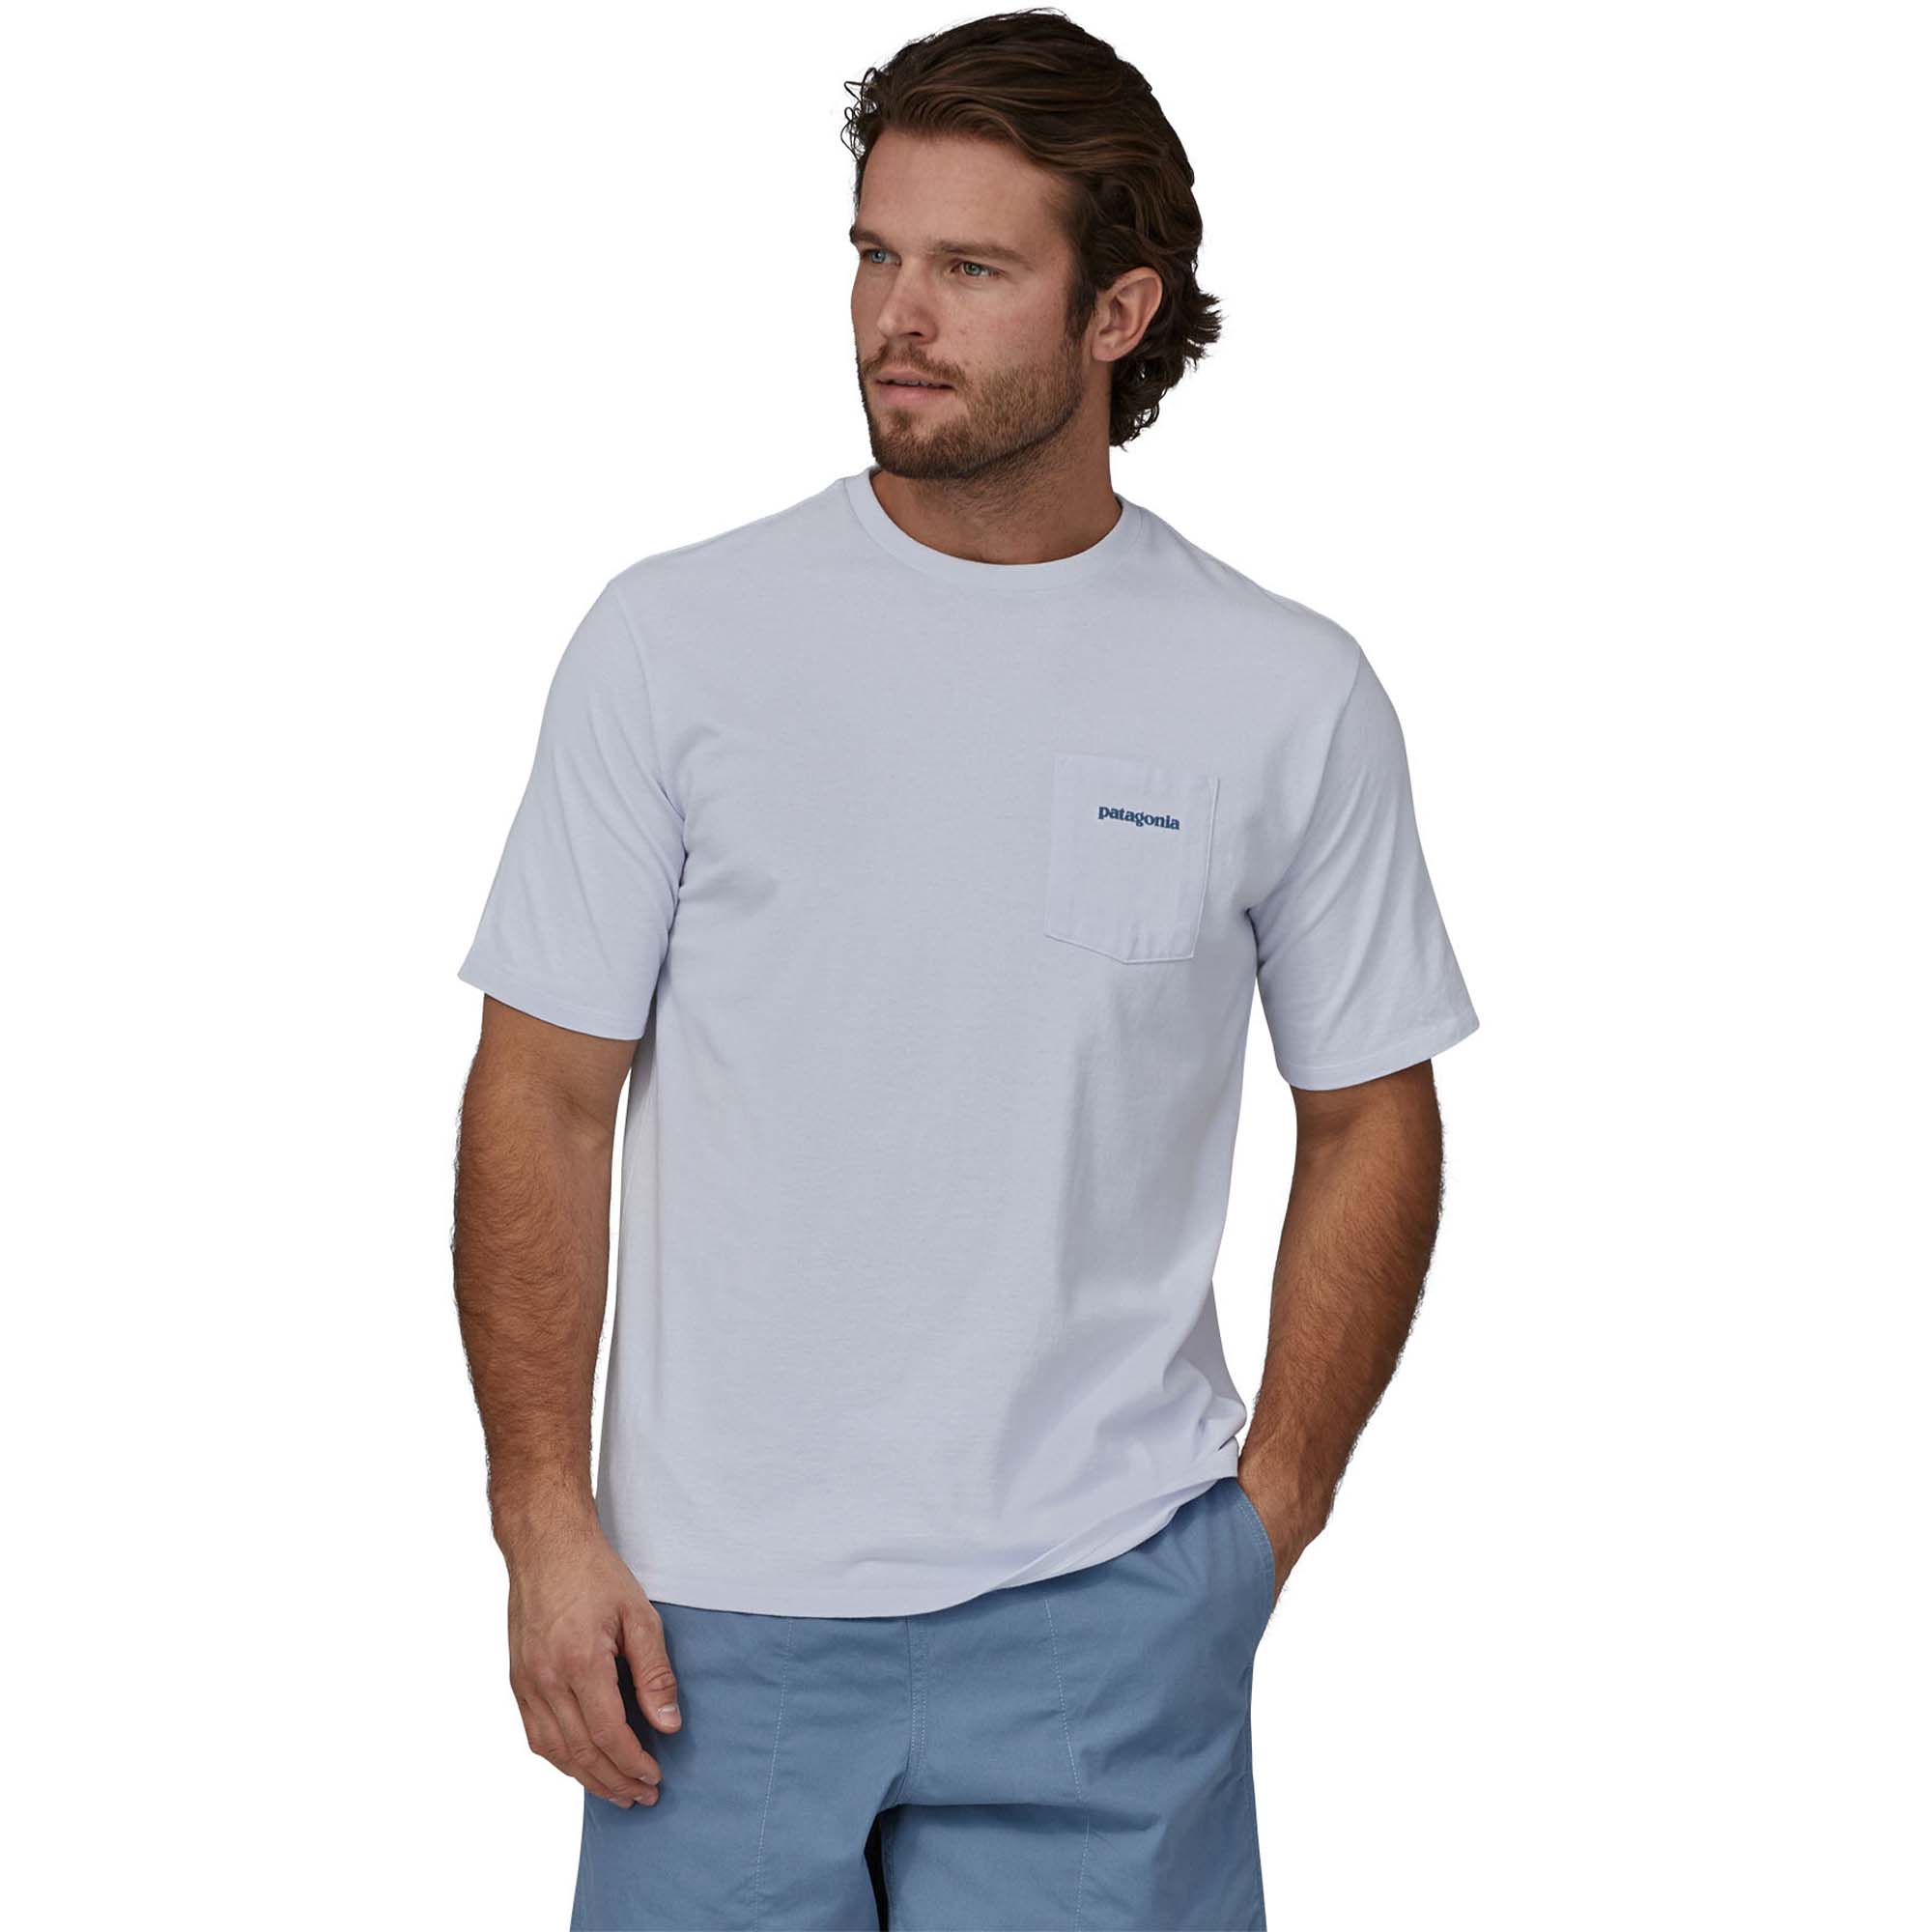 Patagonia Boardshort Pocket Responsibili-Tee Men's T-Shirt